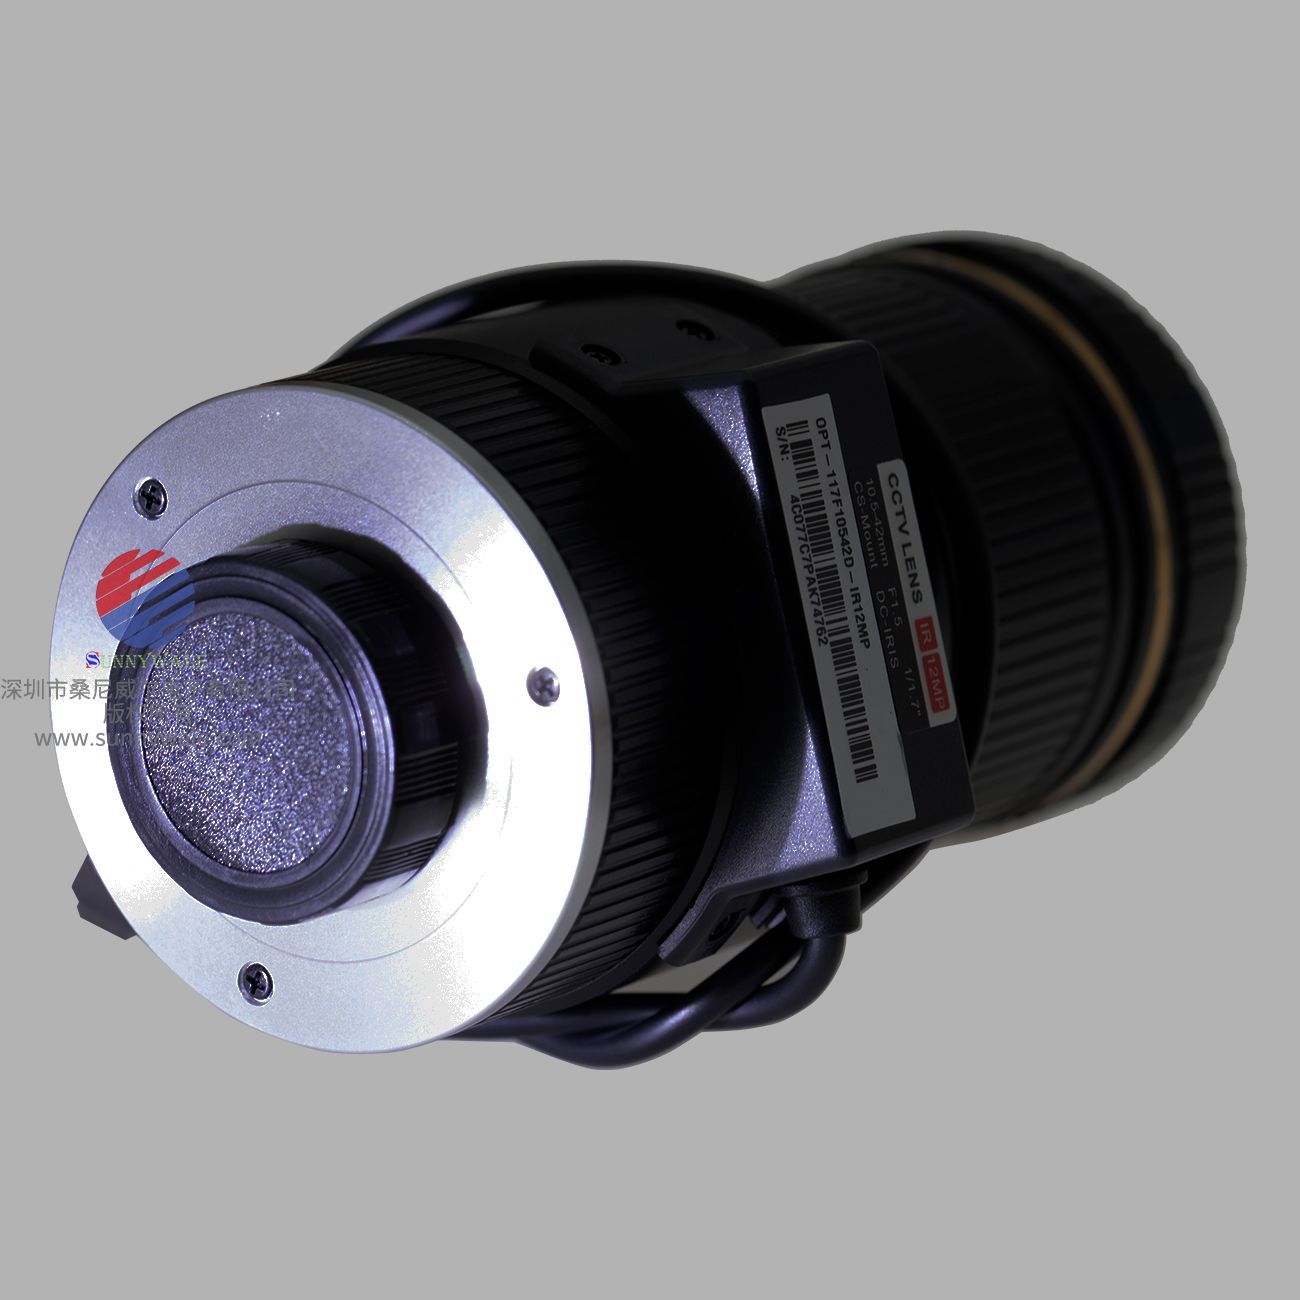 DH-OPT-117F10542D-IR12MP, 大华1200万像素变焦镜头，10.5-42mm变焦镜头, 支持大靶面的镜头，尺寸为1/1.7英寸镜头,焦距为10.5-42mm, 光圈为F1.5（W～F1.8（T）, 物距为4M, 支持红外功能，支持DC光圈，CS接口,1200万像素镜头，12MP镜头，网络会议摄像机镜头